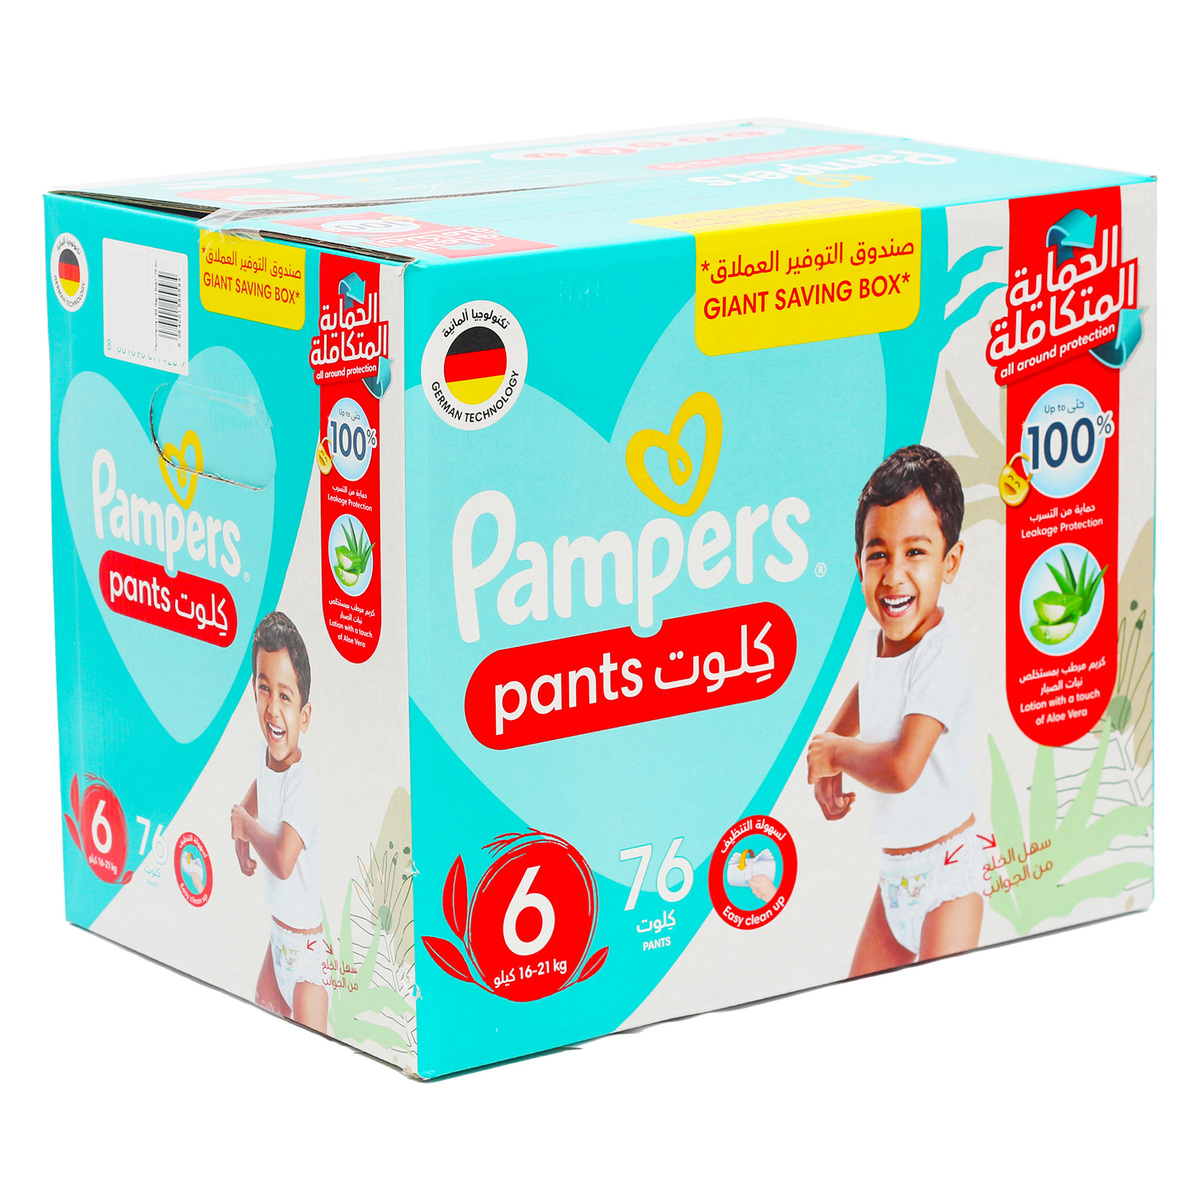 Pampers Diaper Pants Size 6 16-21kg Value Pack 76 pcs